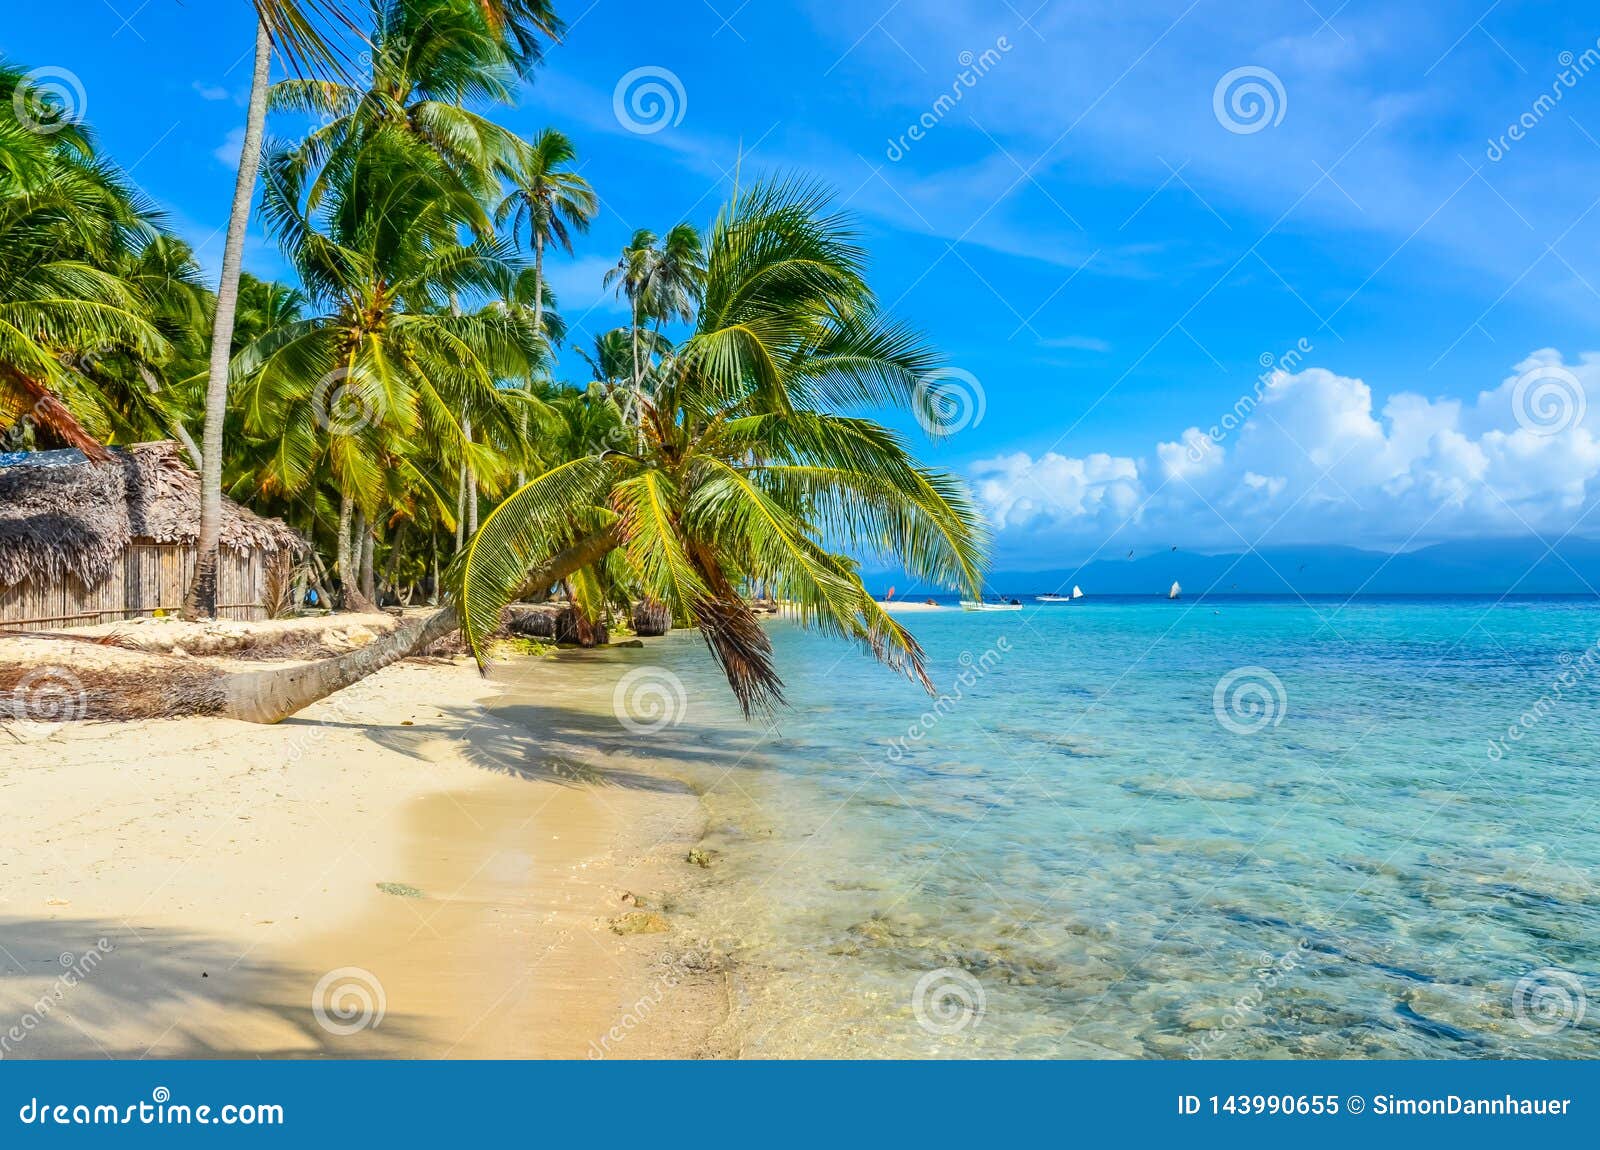 beautiful lonely beach in caribbean san blas island, kuna yala, panama. turquoise tropical sea, paradise travel destination,